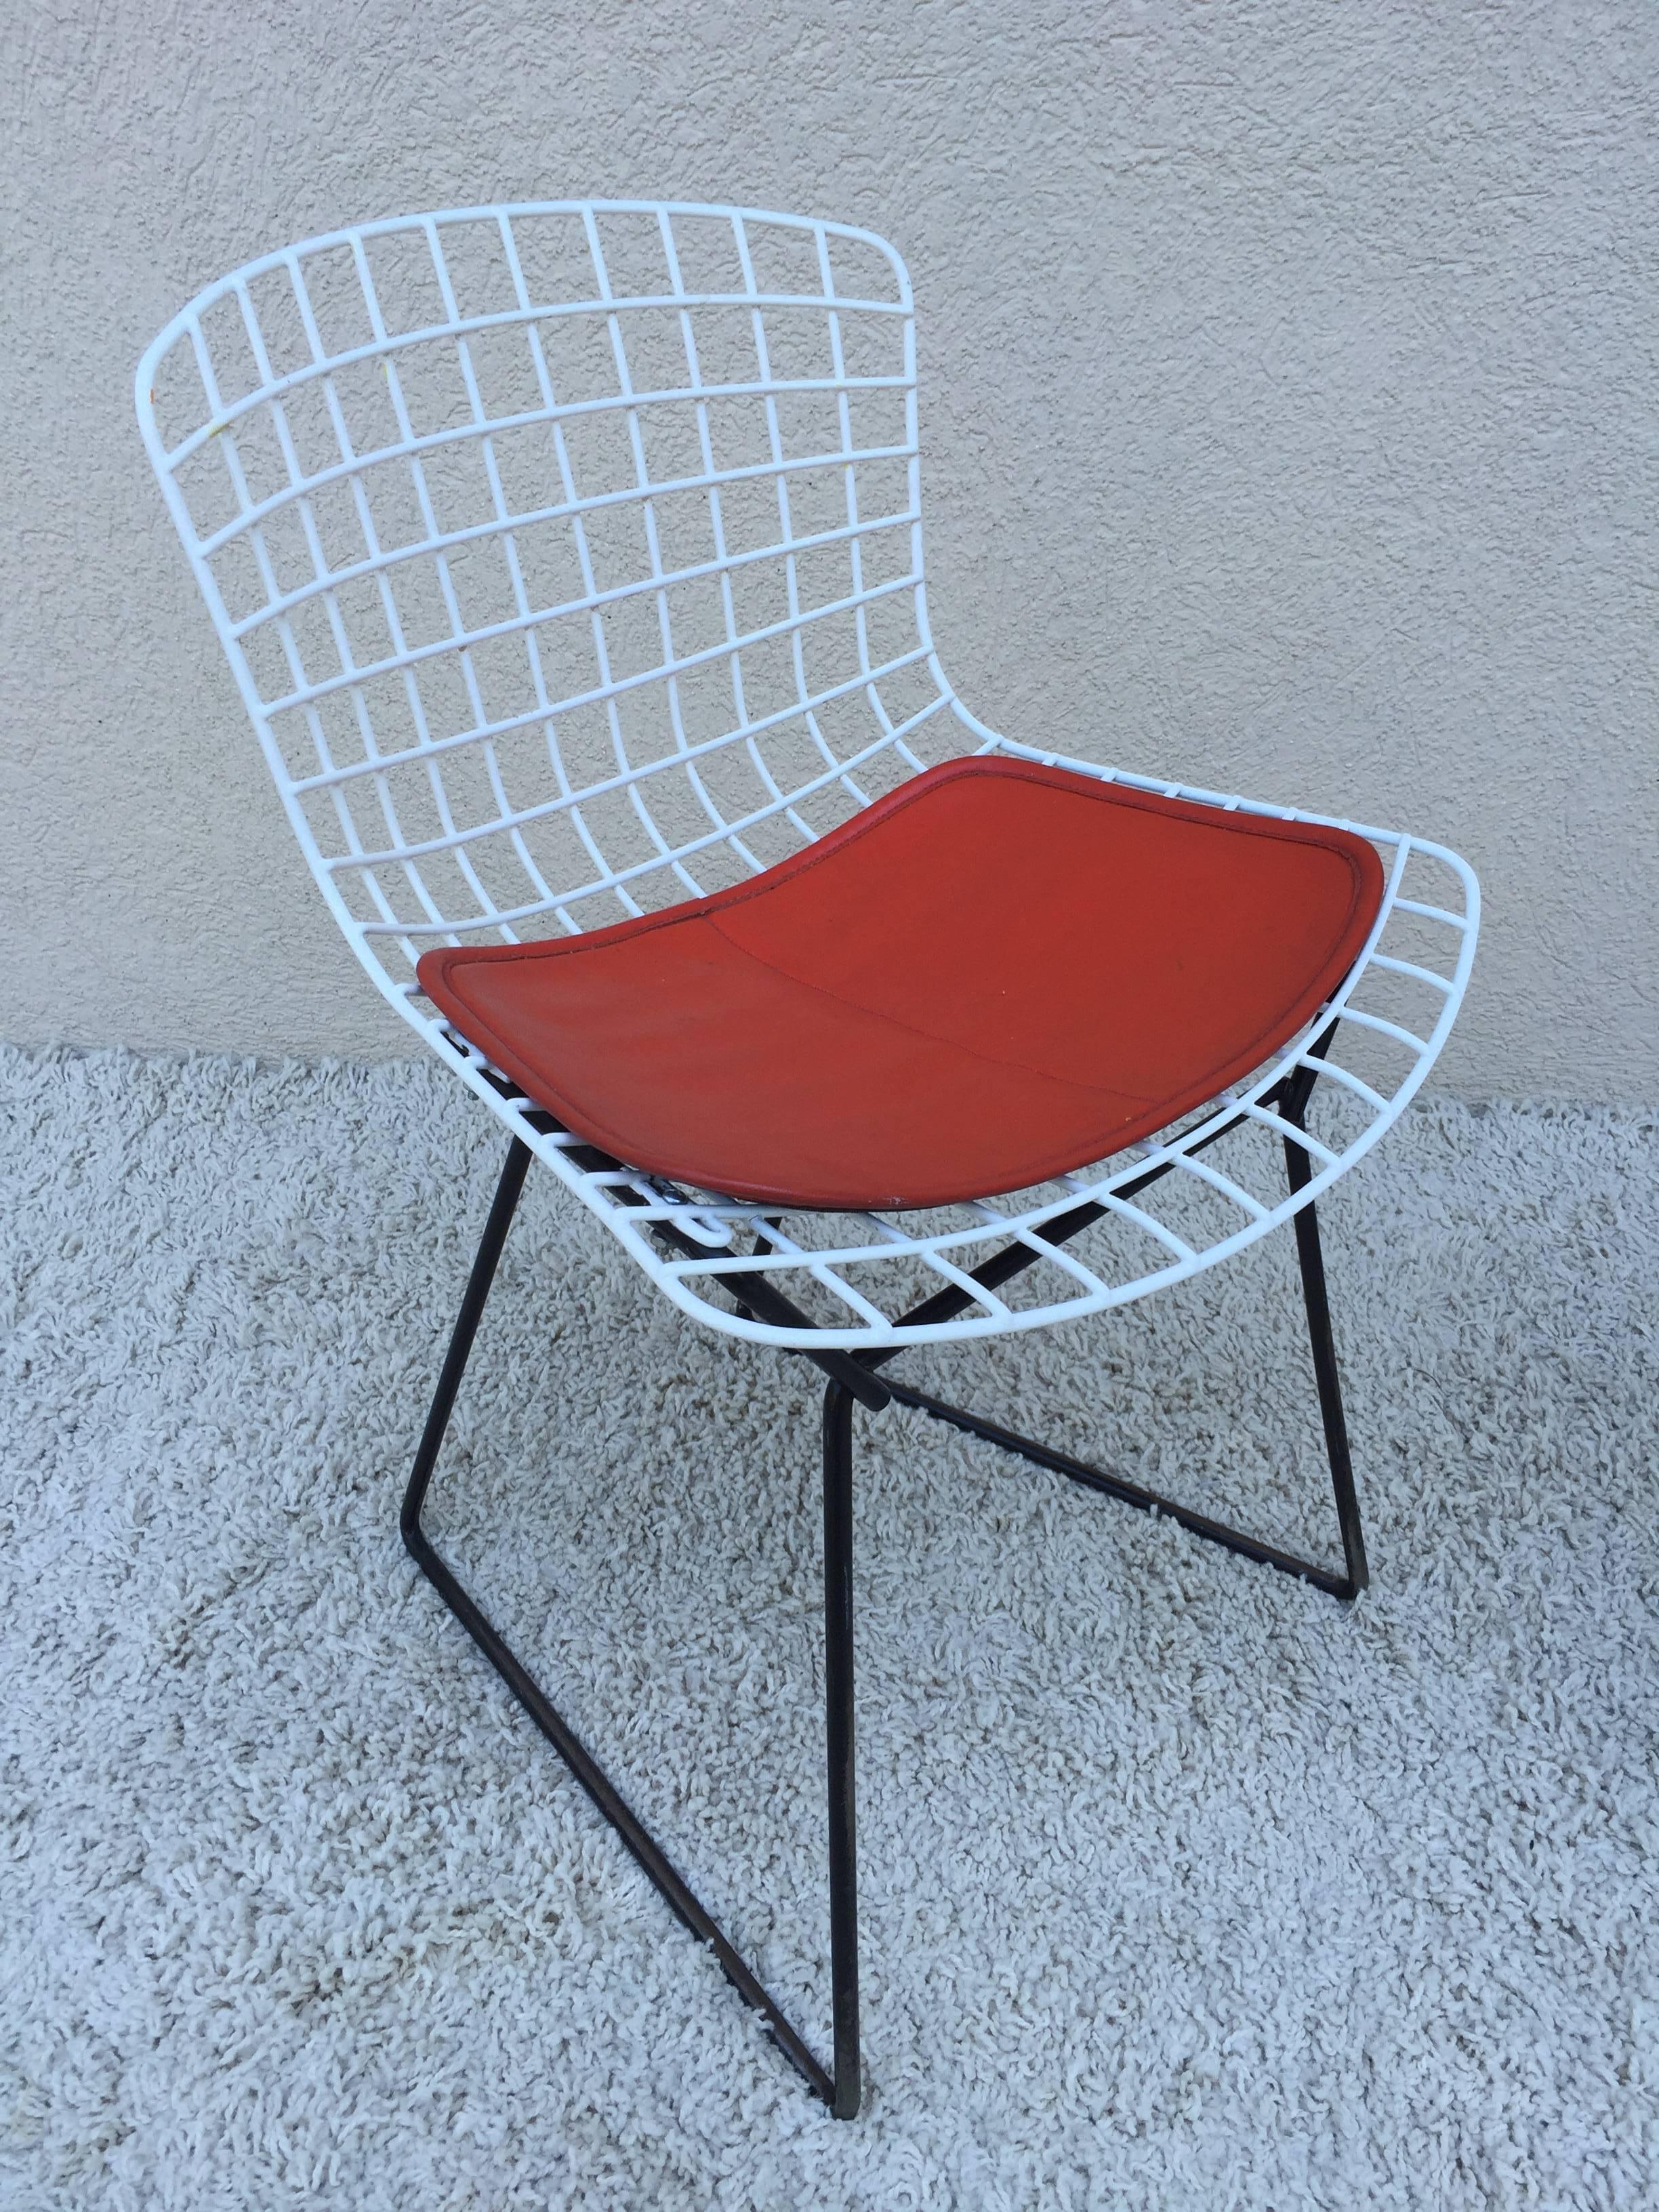 American Set of Harry Bertoia Childs Chairs, Original Knoll Orange Seat Pads